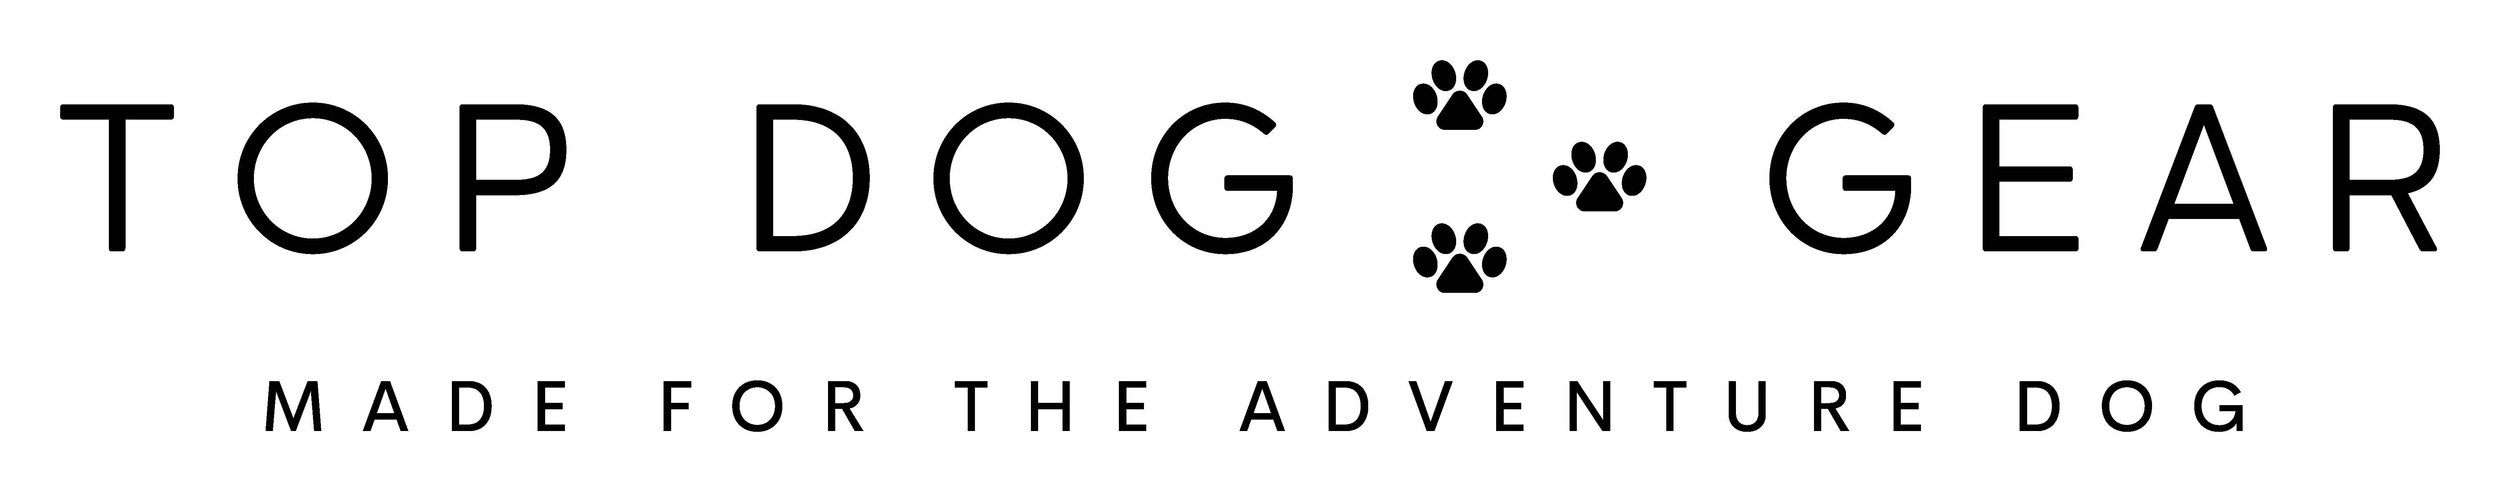 Top Dog Gear Logo.jpg